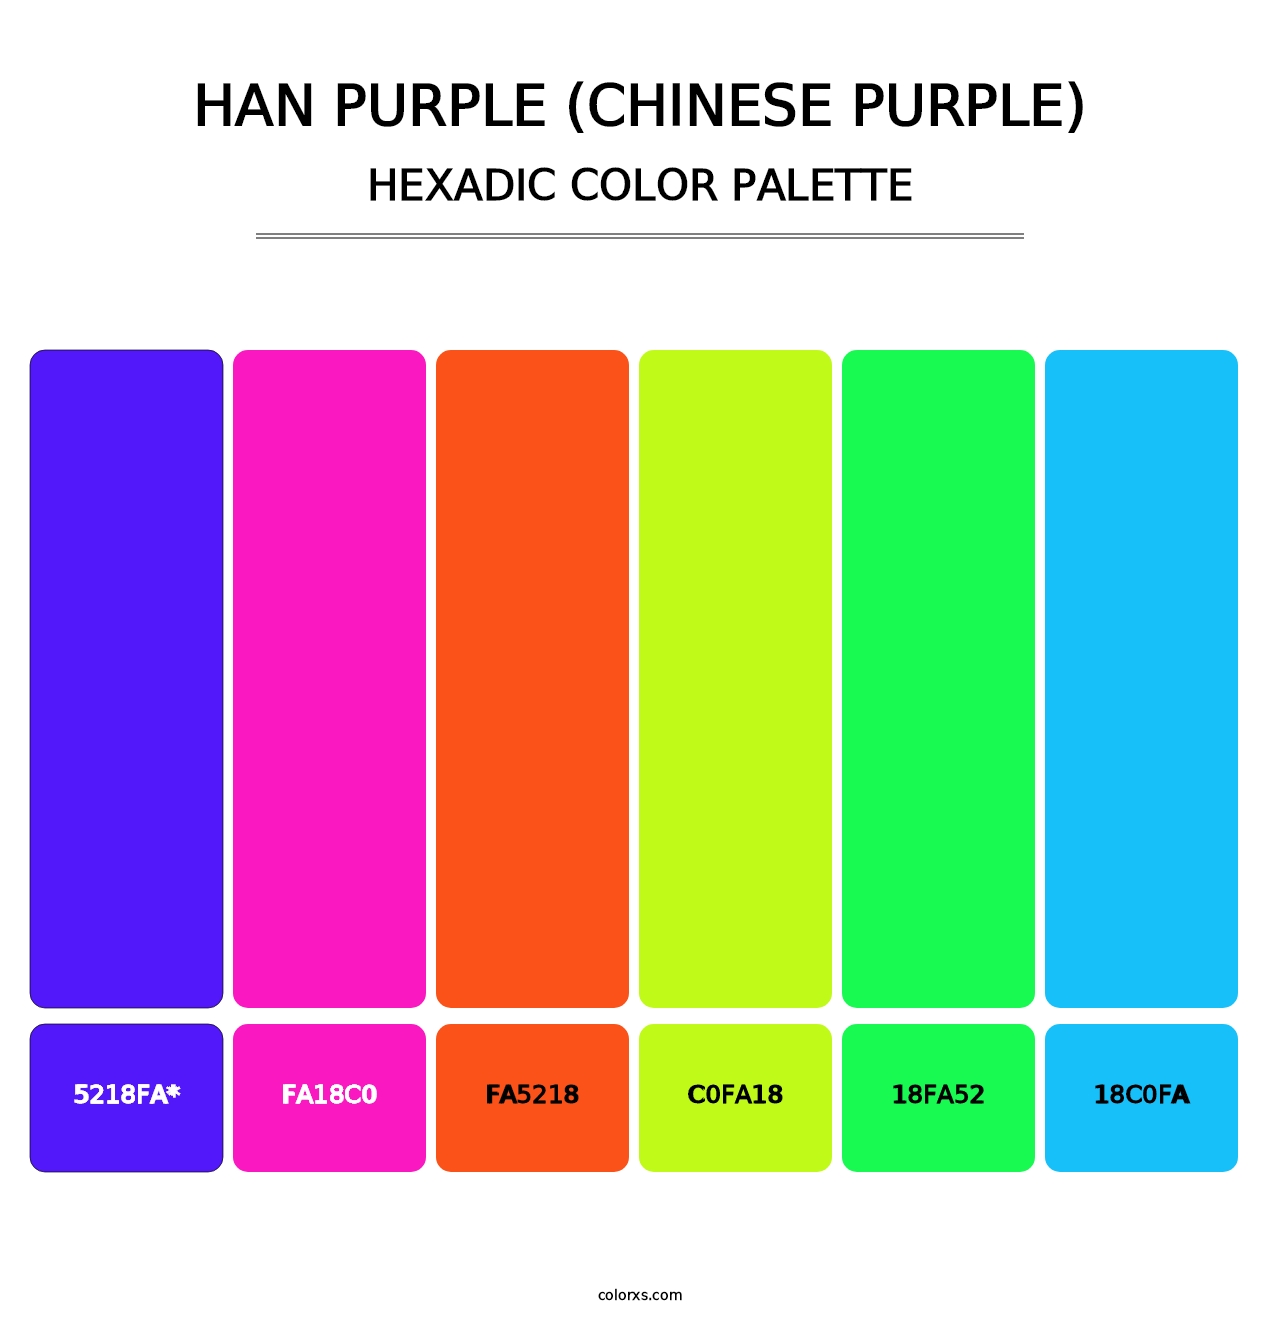 Han Purple (Chinese Purple) - Hexadic Color Palette